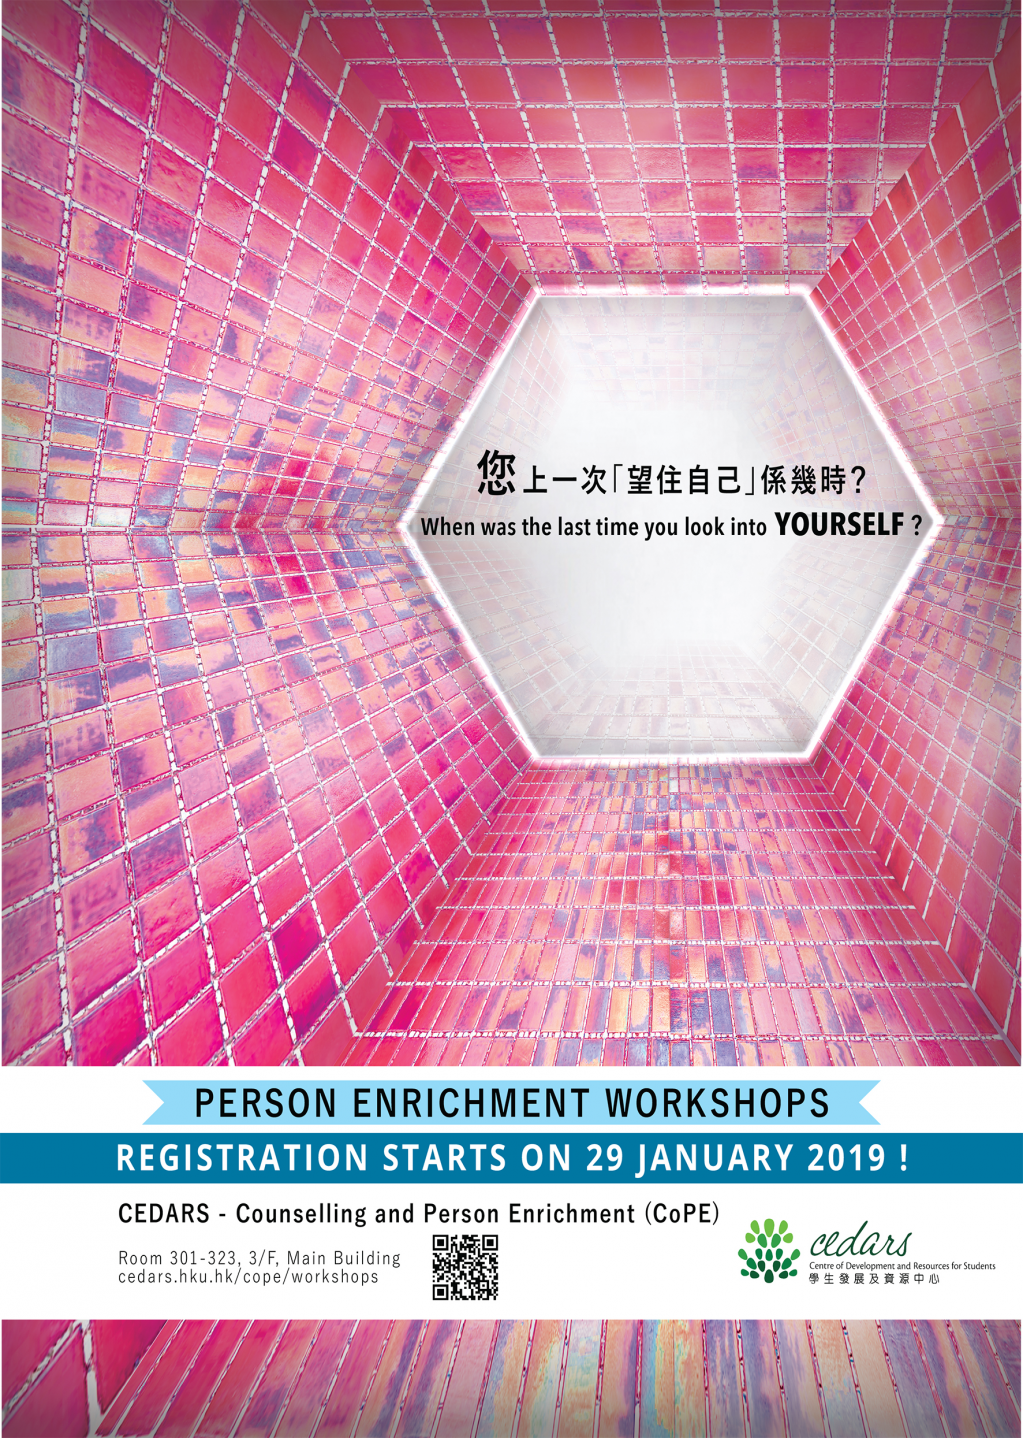 CEDARS Person Enrichment Workshops: Registration starts on 29 Jan 2019!